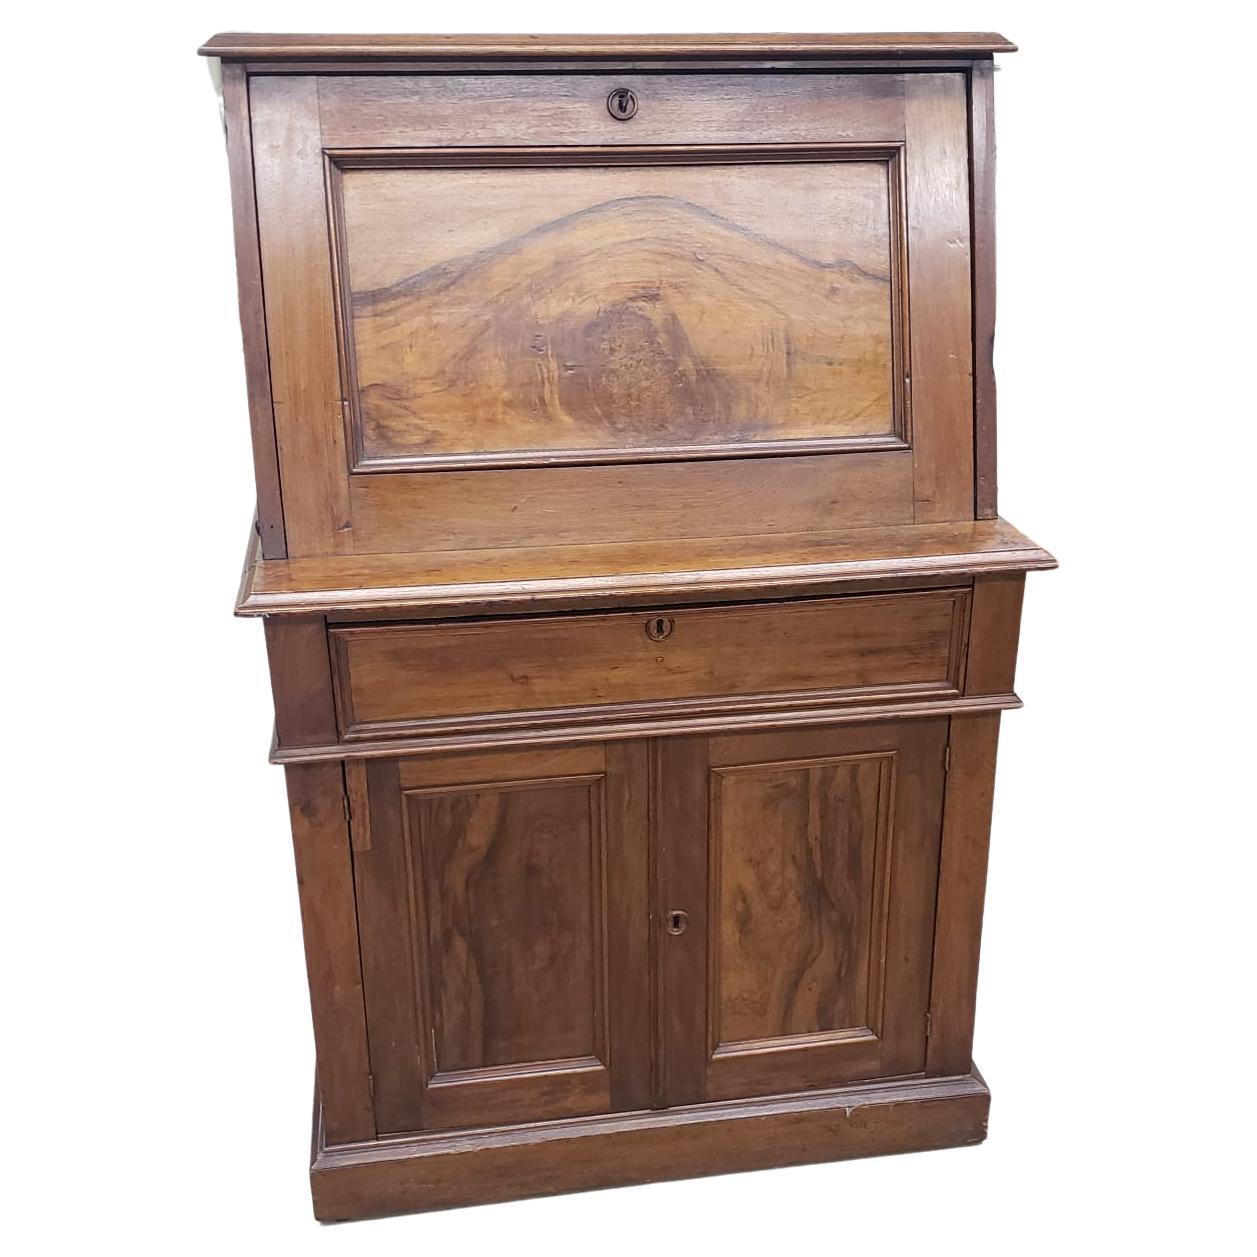 An amazing mid-19th Century Victorian Walnut Slant Front Secretary Desk in good antique condition. Measures 30